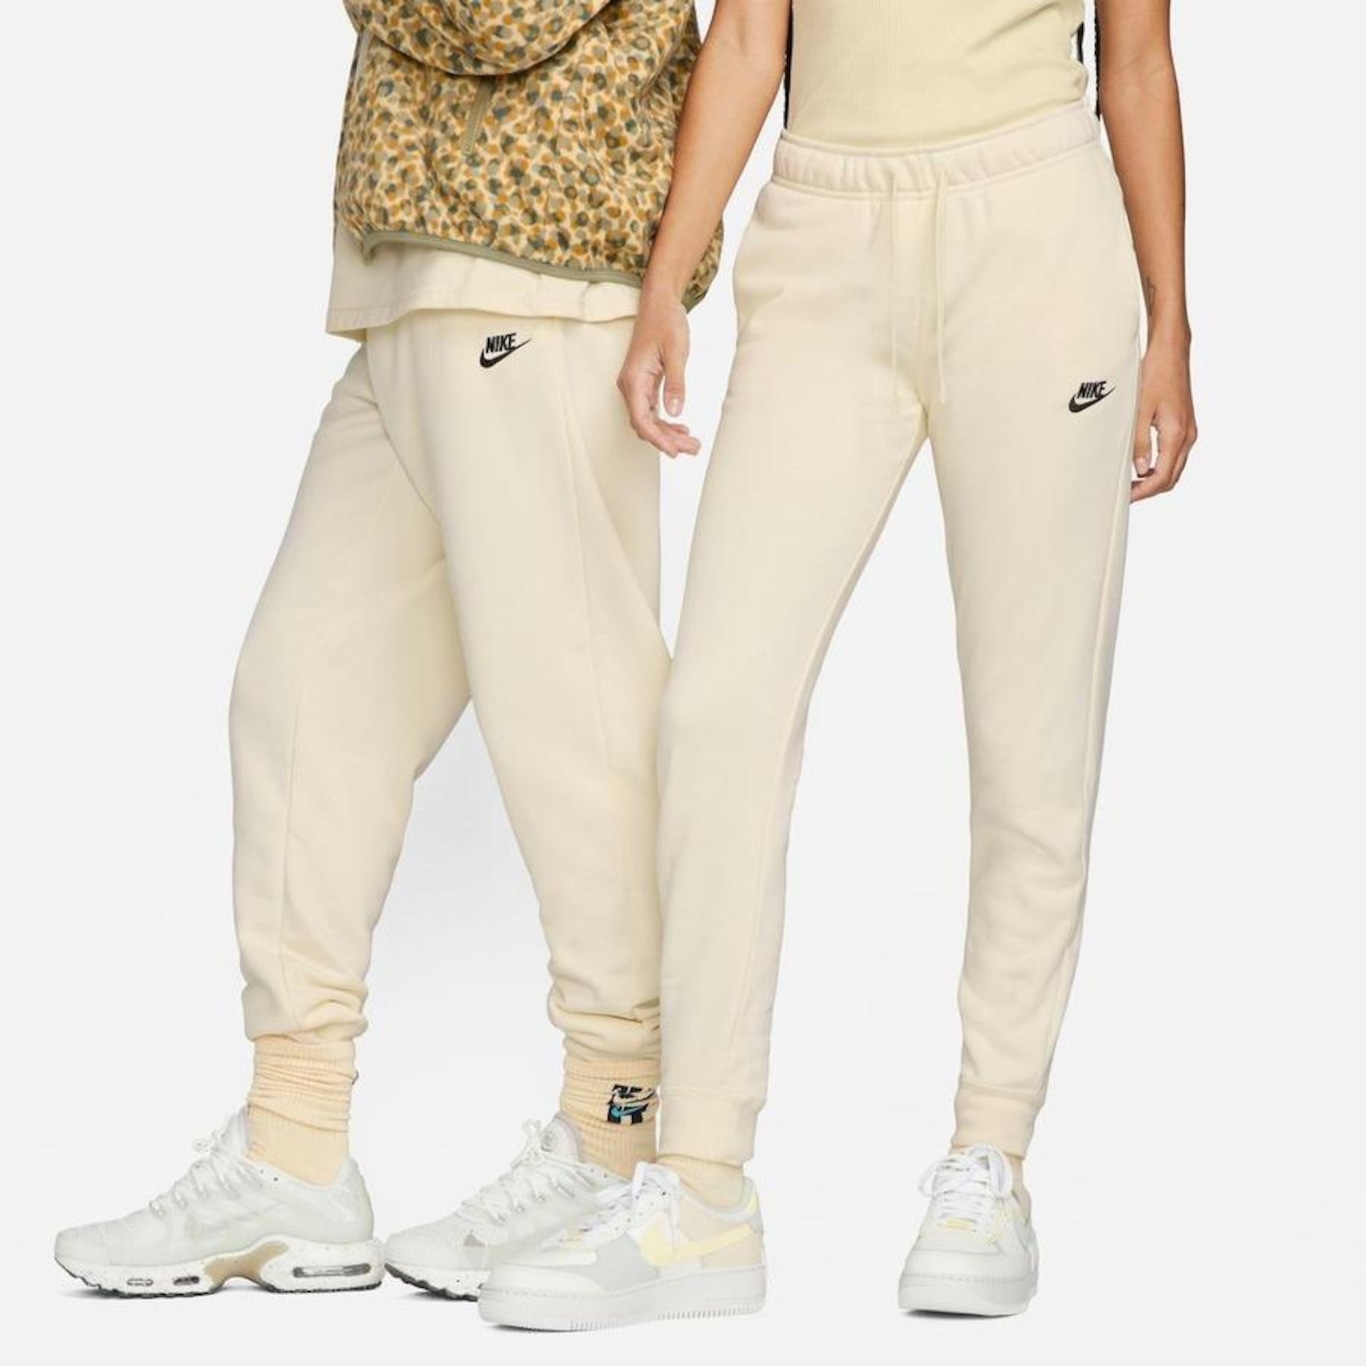 Meias de jogging Nike Tech Fleece Slim Fit Bege e Branco para